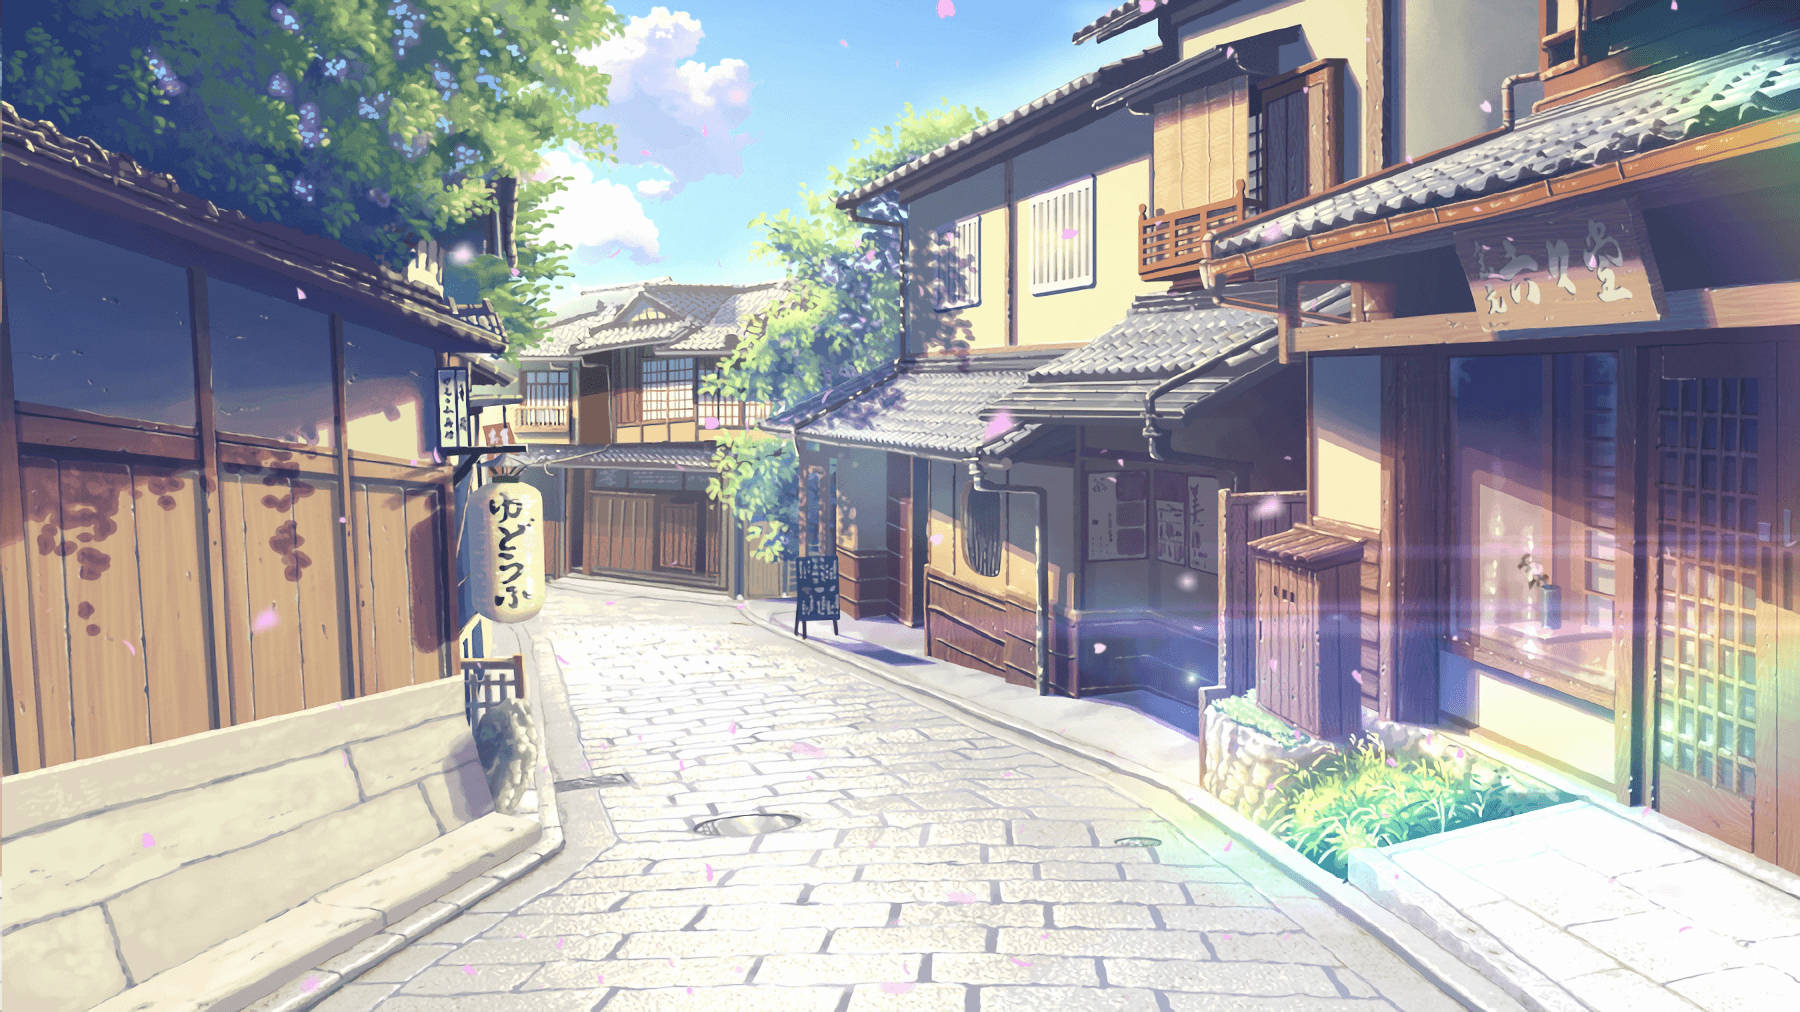 Village Street In Japanese Anime City Wallpaper